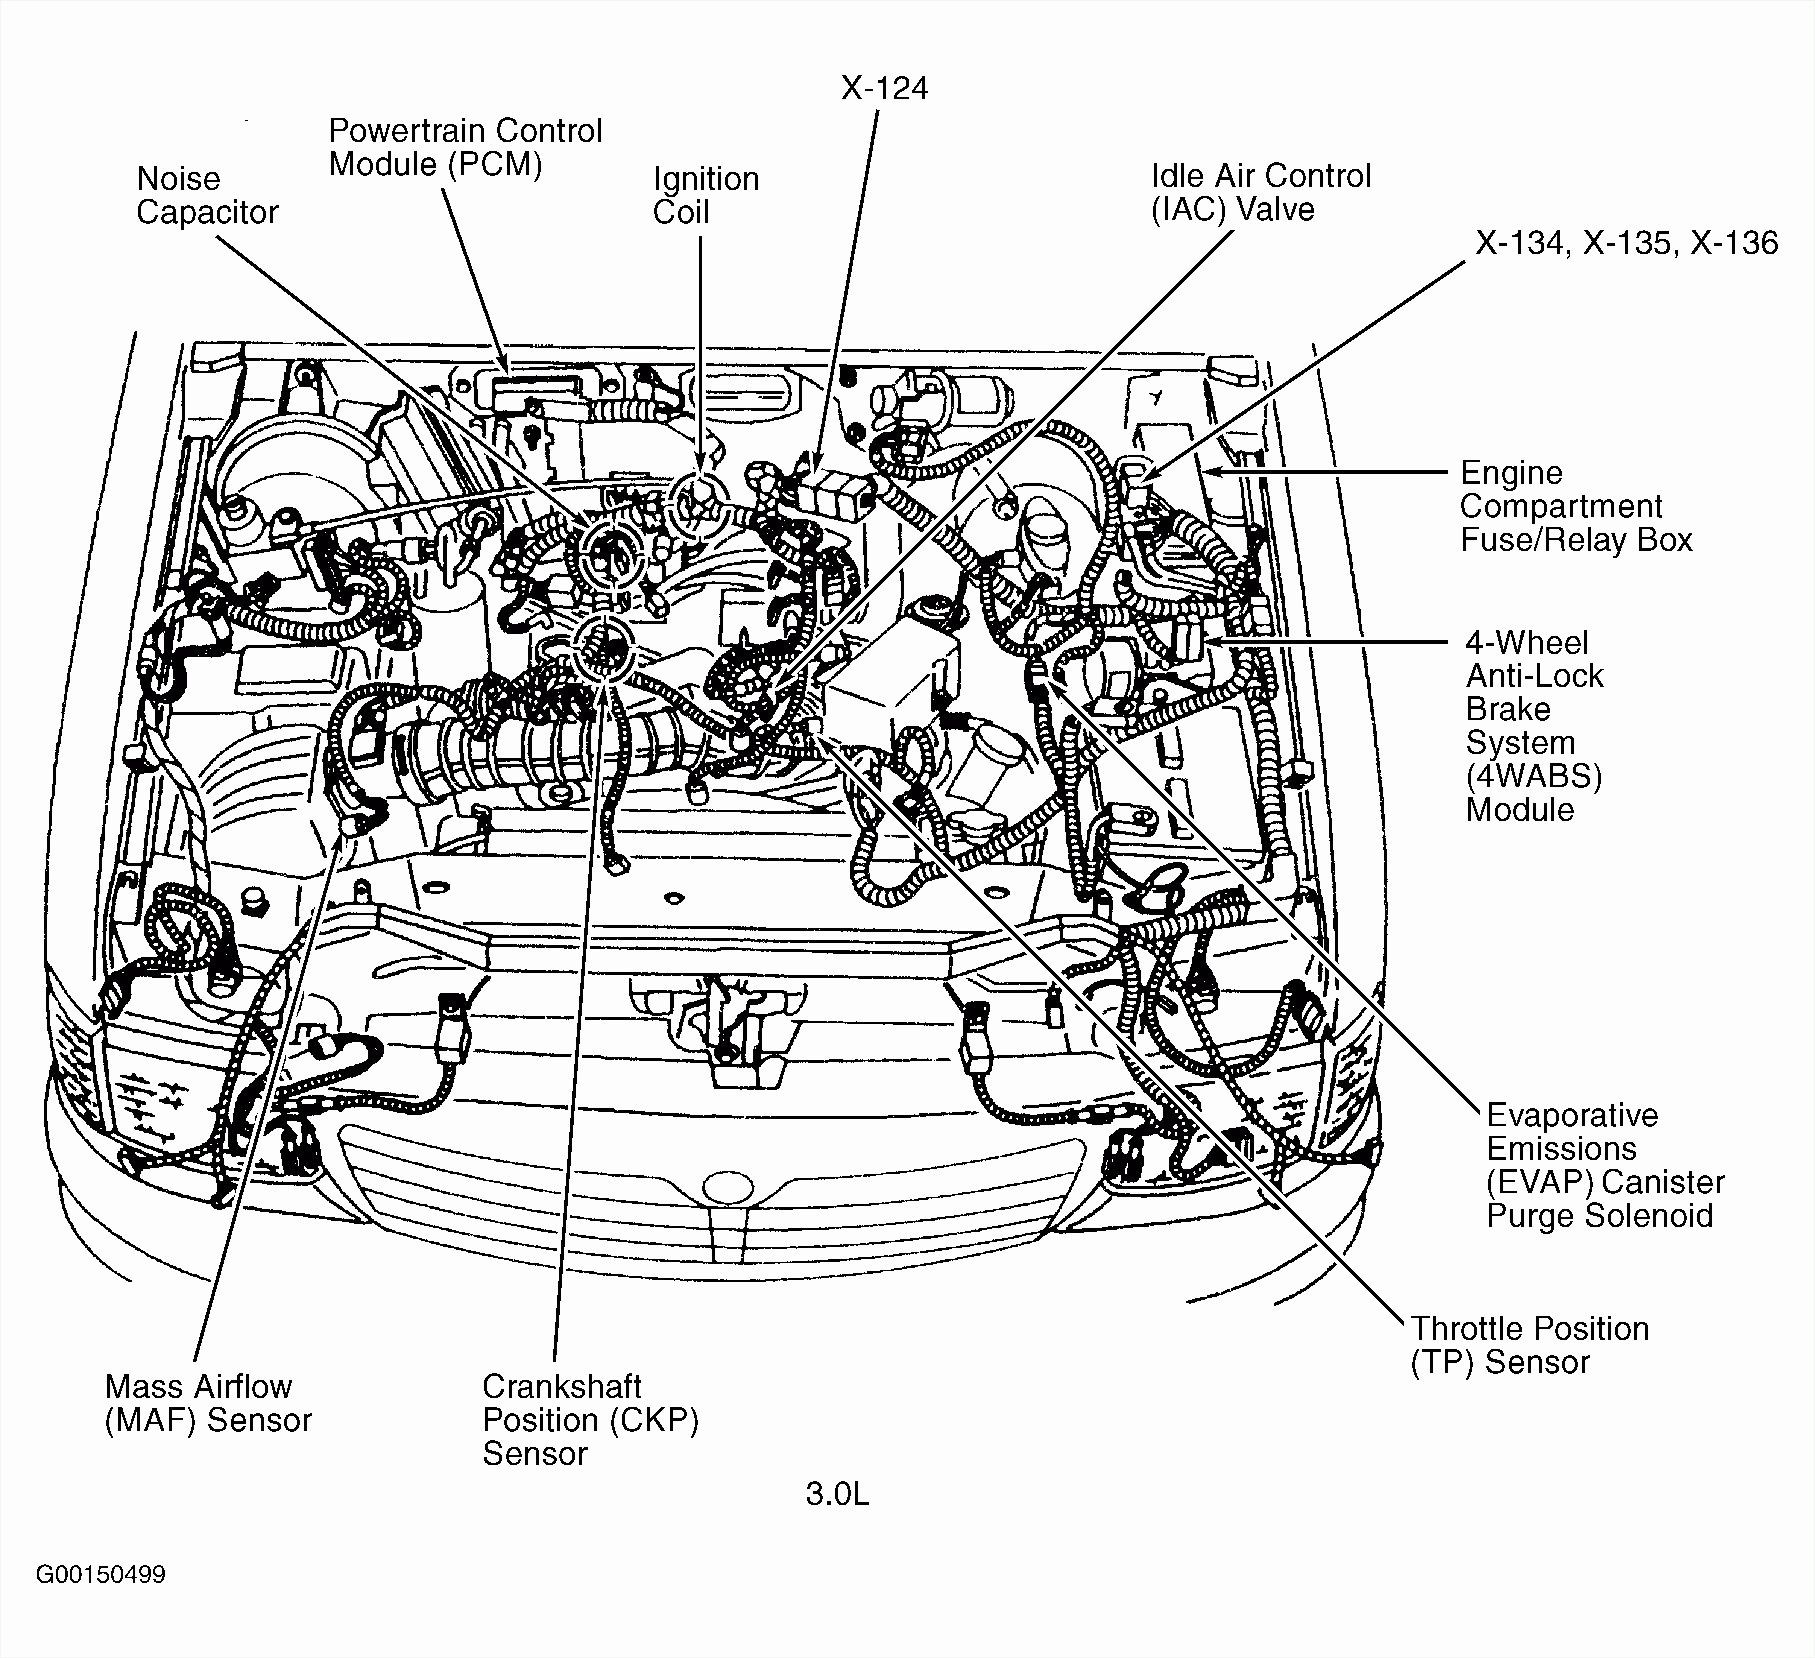 1997 Jeep Grand Cherokee Engine Diagram Wiring Diagram New 1997 Jeep Cherokee Sport Engine Diagram 1997 Jeep Cherokee Engine Diagram